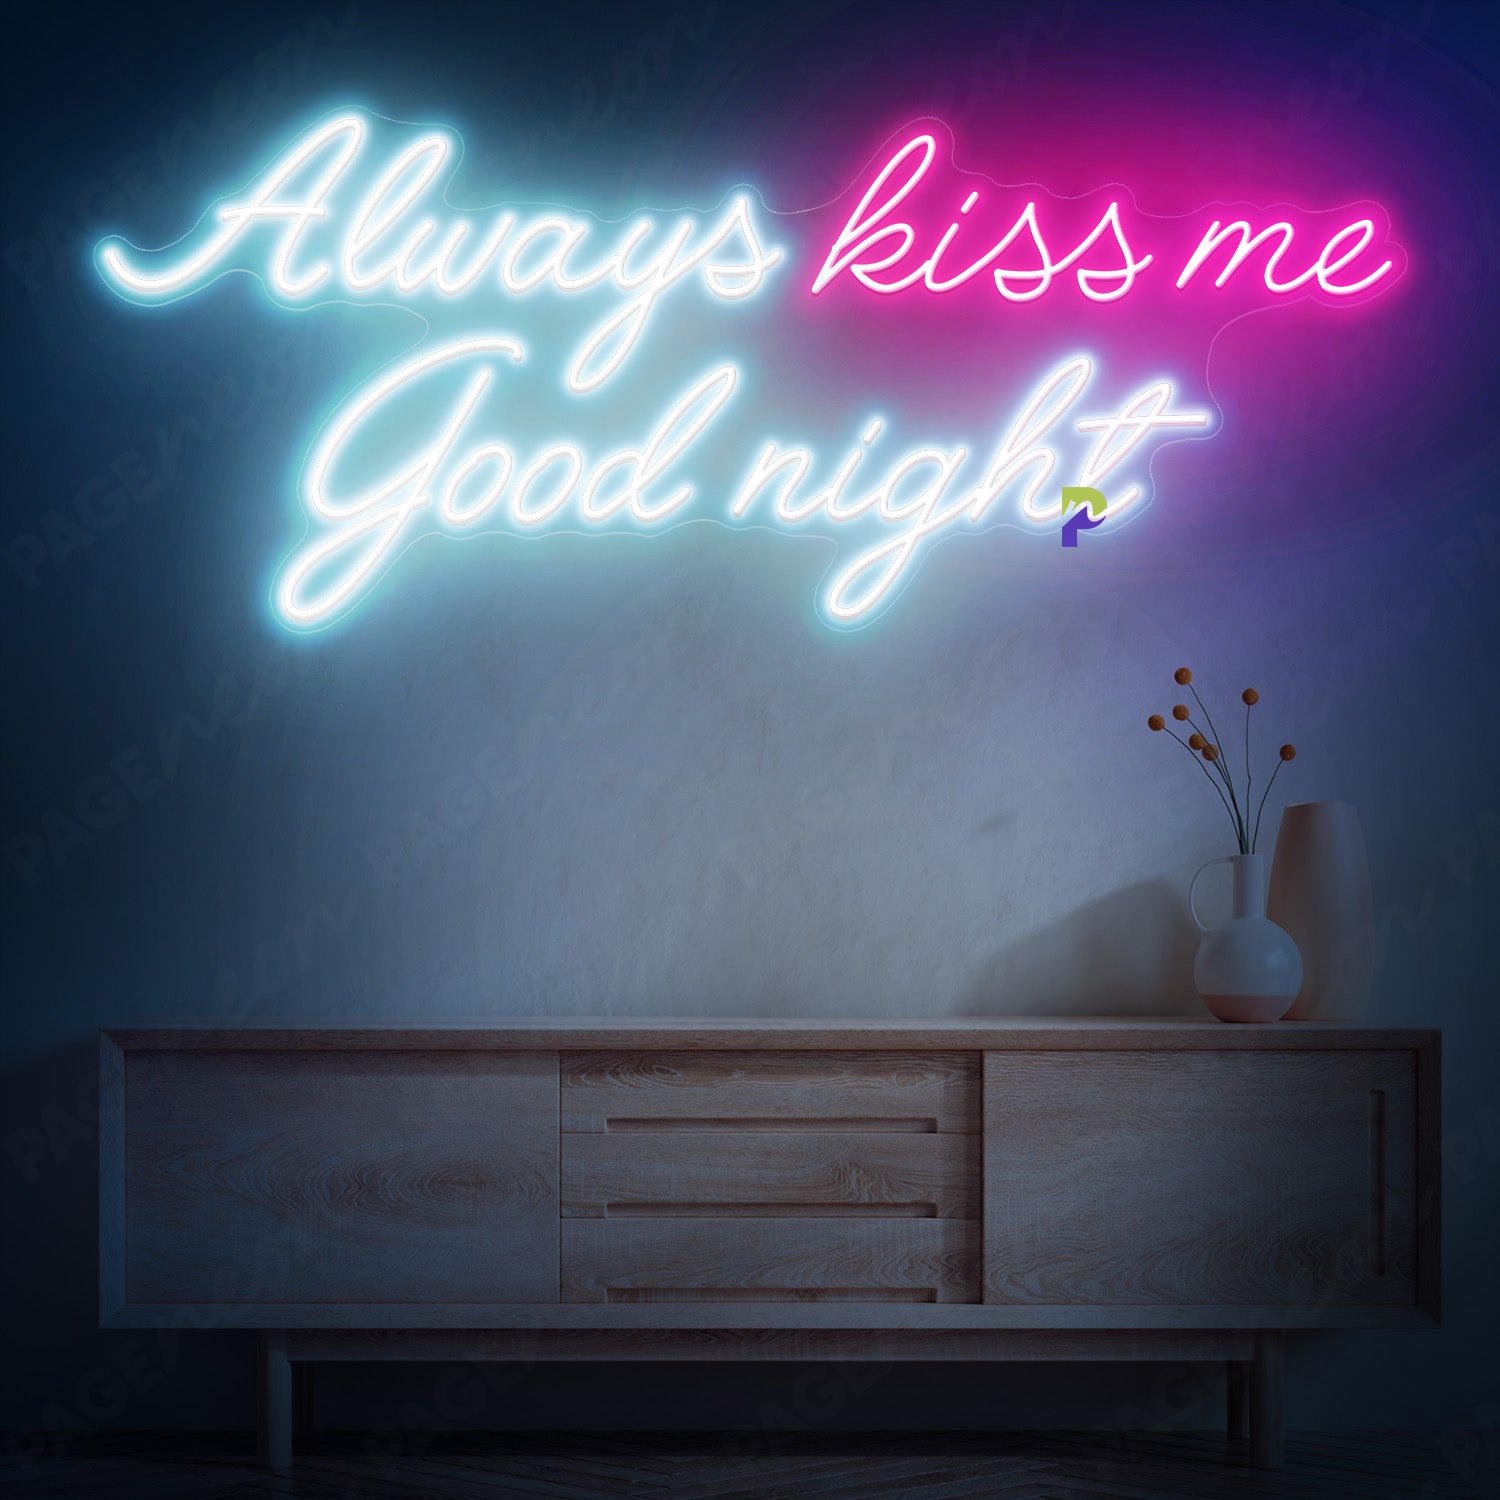 Always Kiss Me Goodnight Neon Sign Wedding Led Light